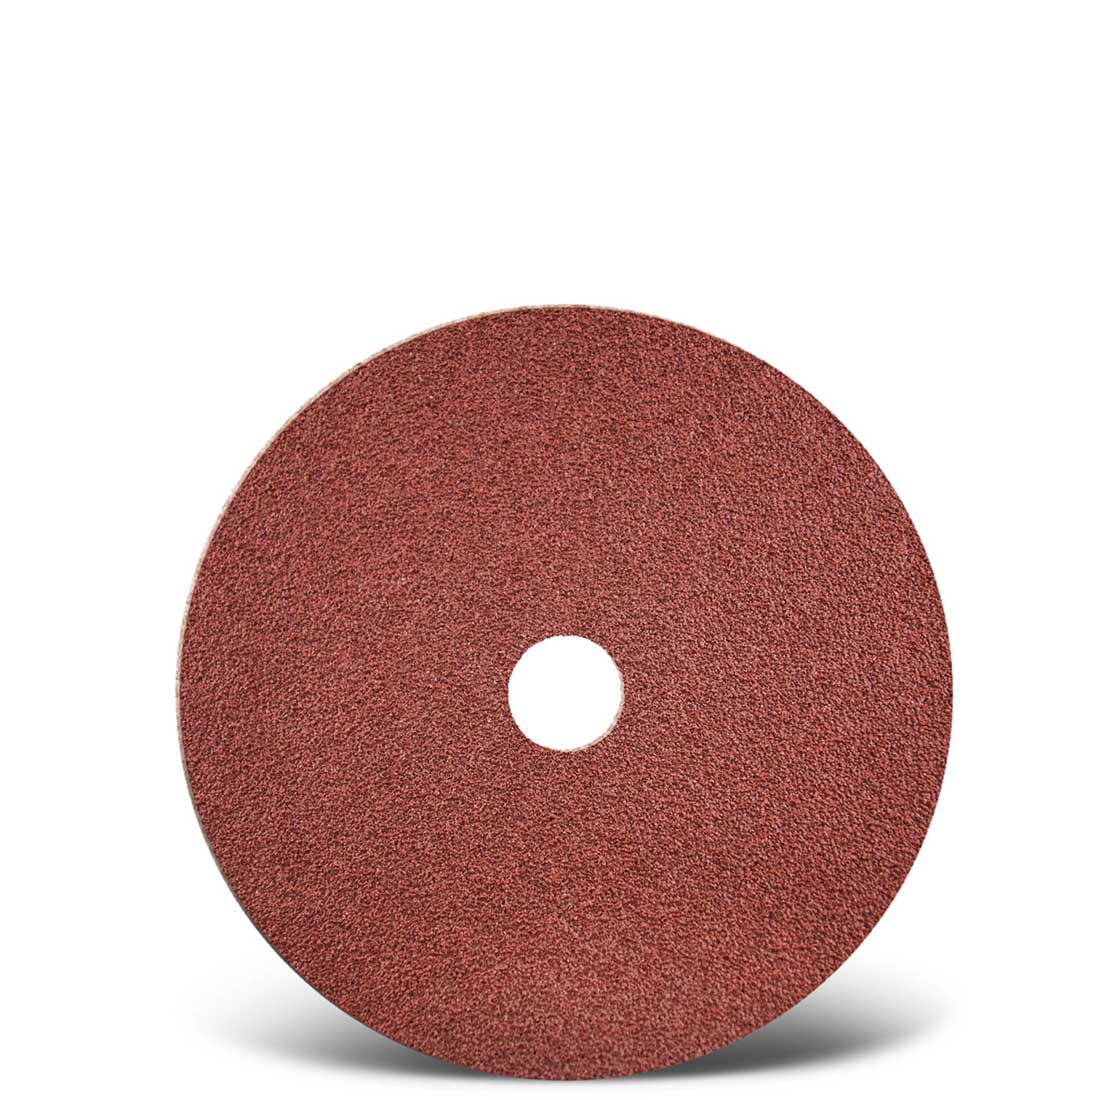 MENZER dual sanding discs for orbital floor sanders, G16–120, Ø 406 mm / doublesided / aluminium oxide